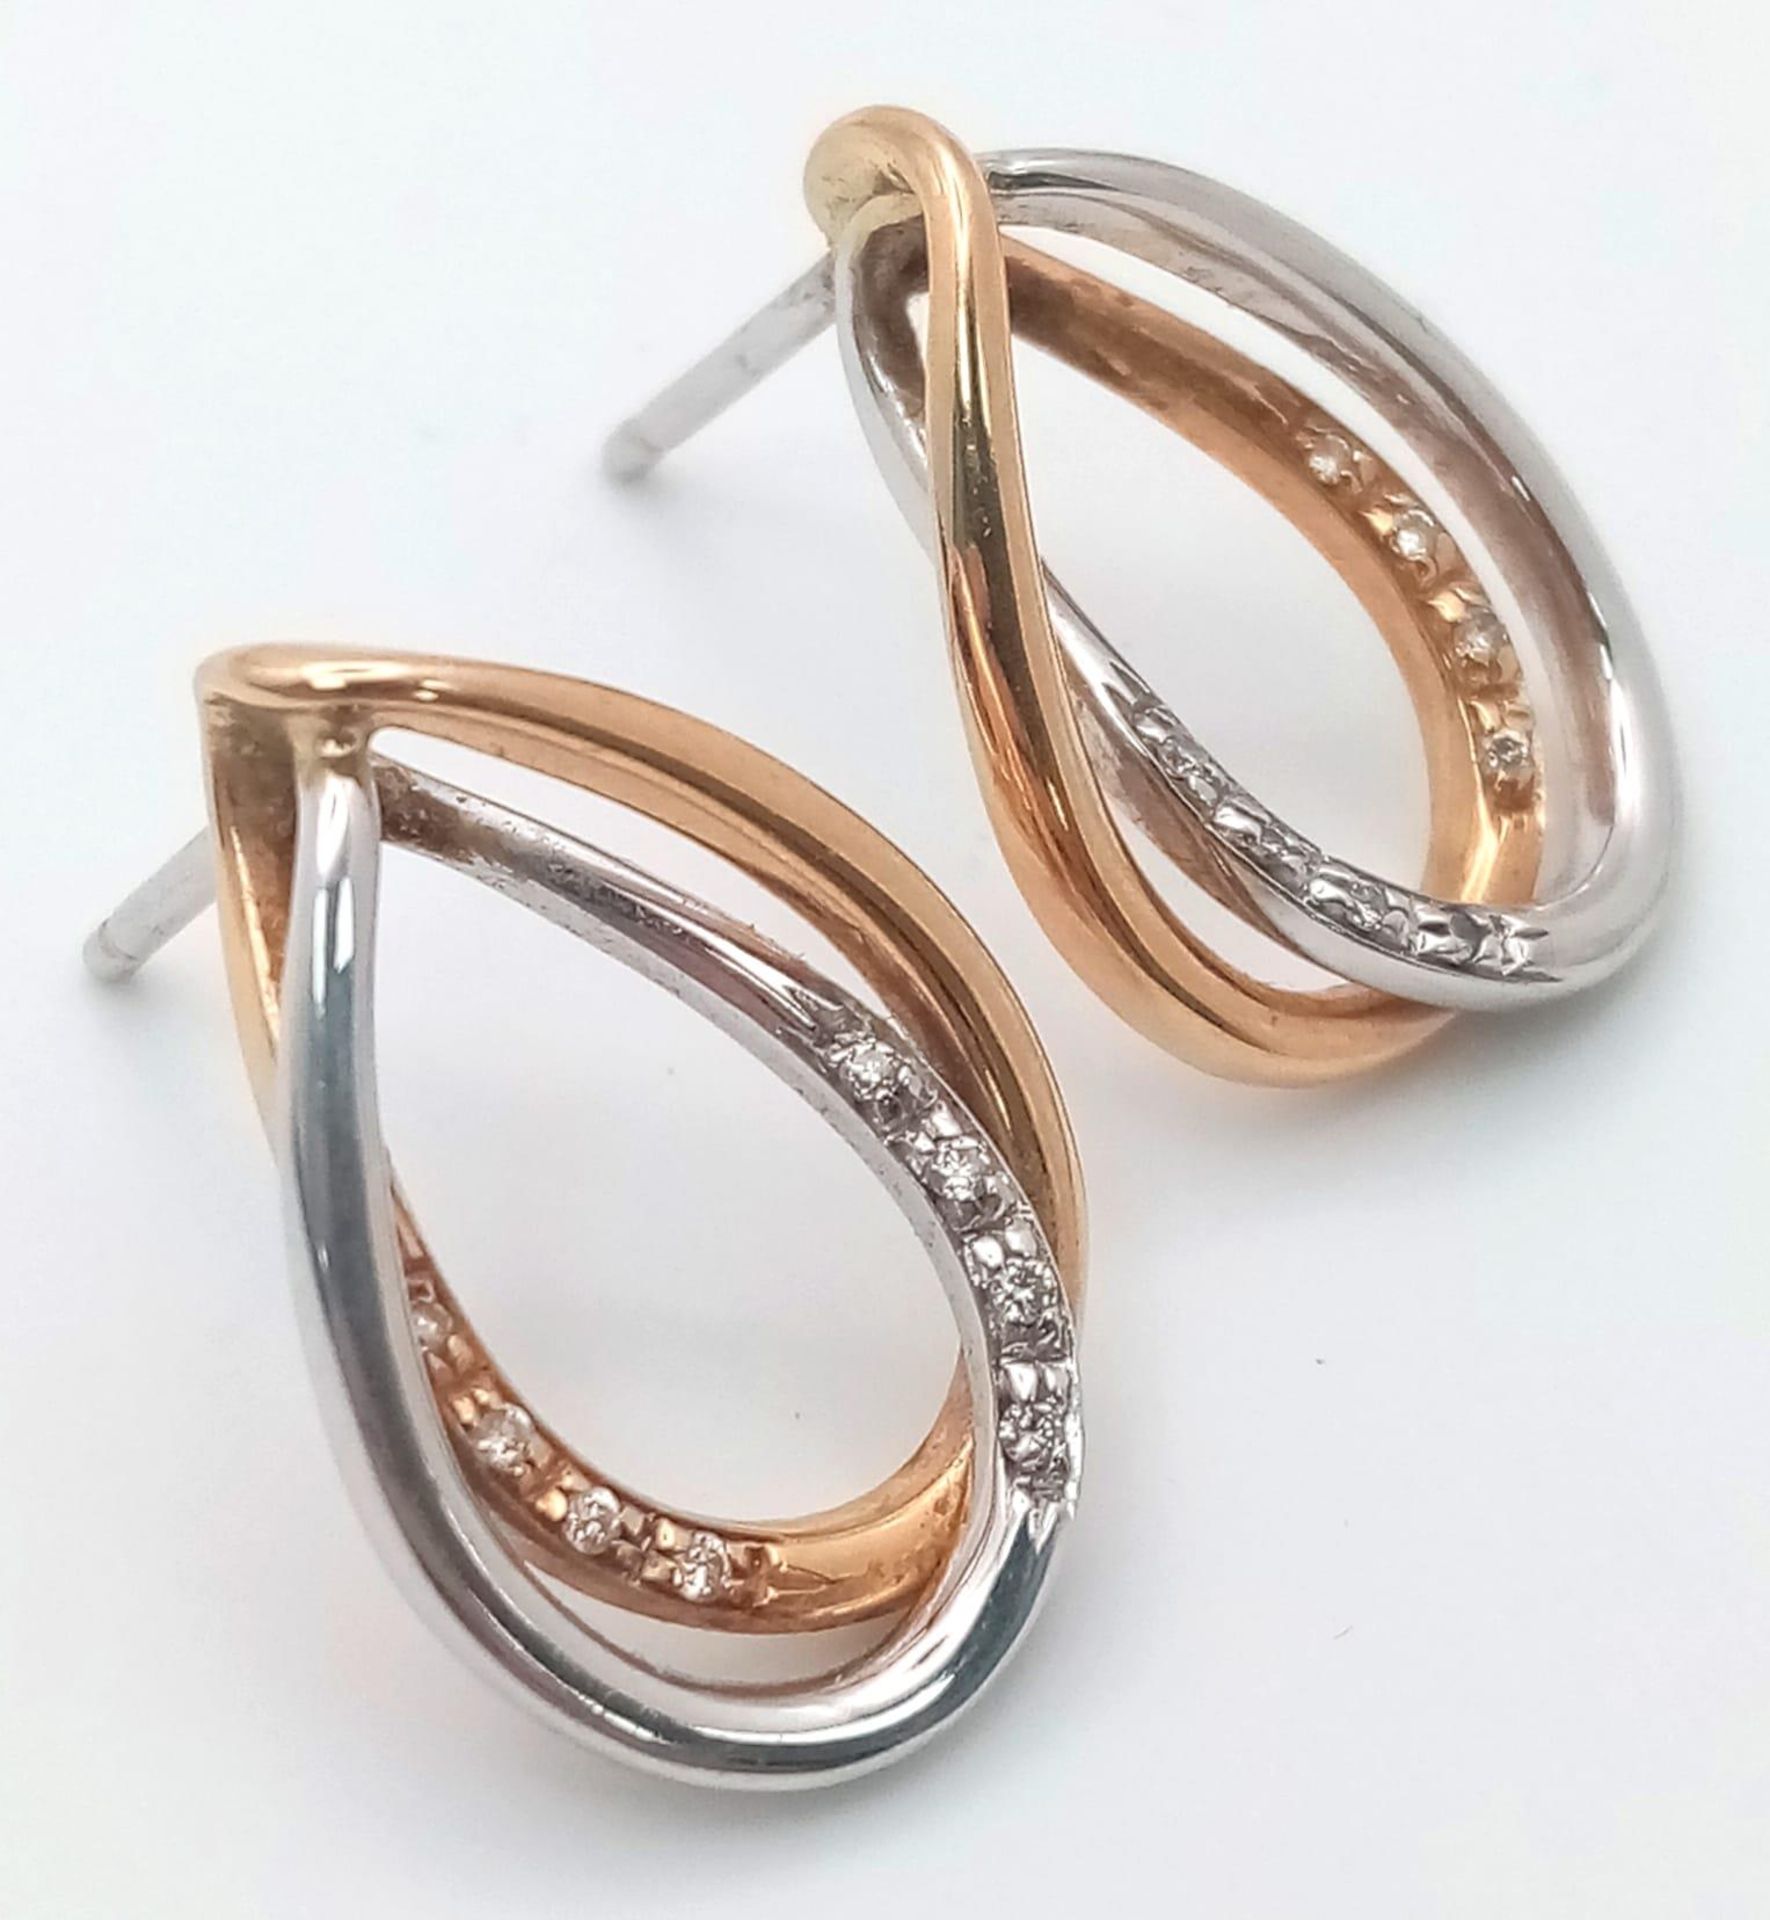 A Pair of 18K 2 Colour Diamond Set Drop Stud Earrings. Need butterfly backs. 2.1cm length, 6g